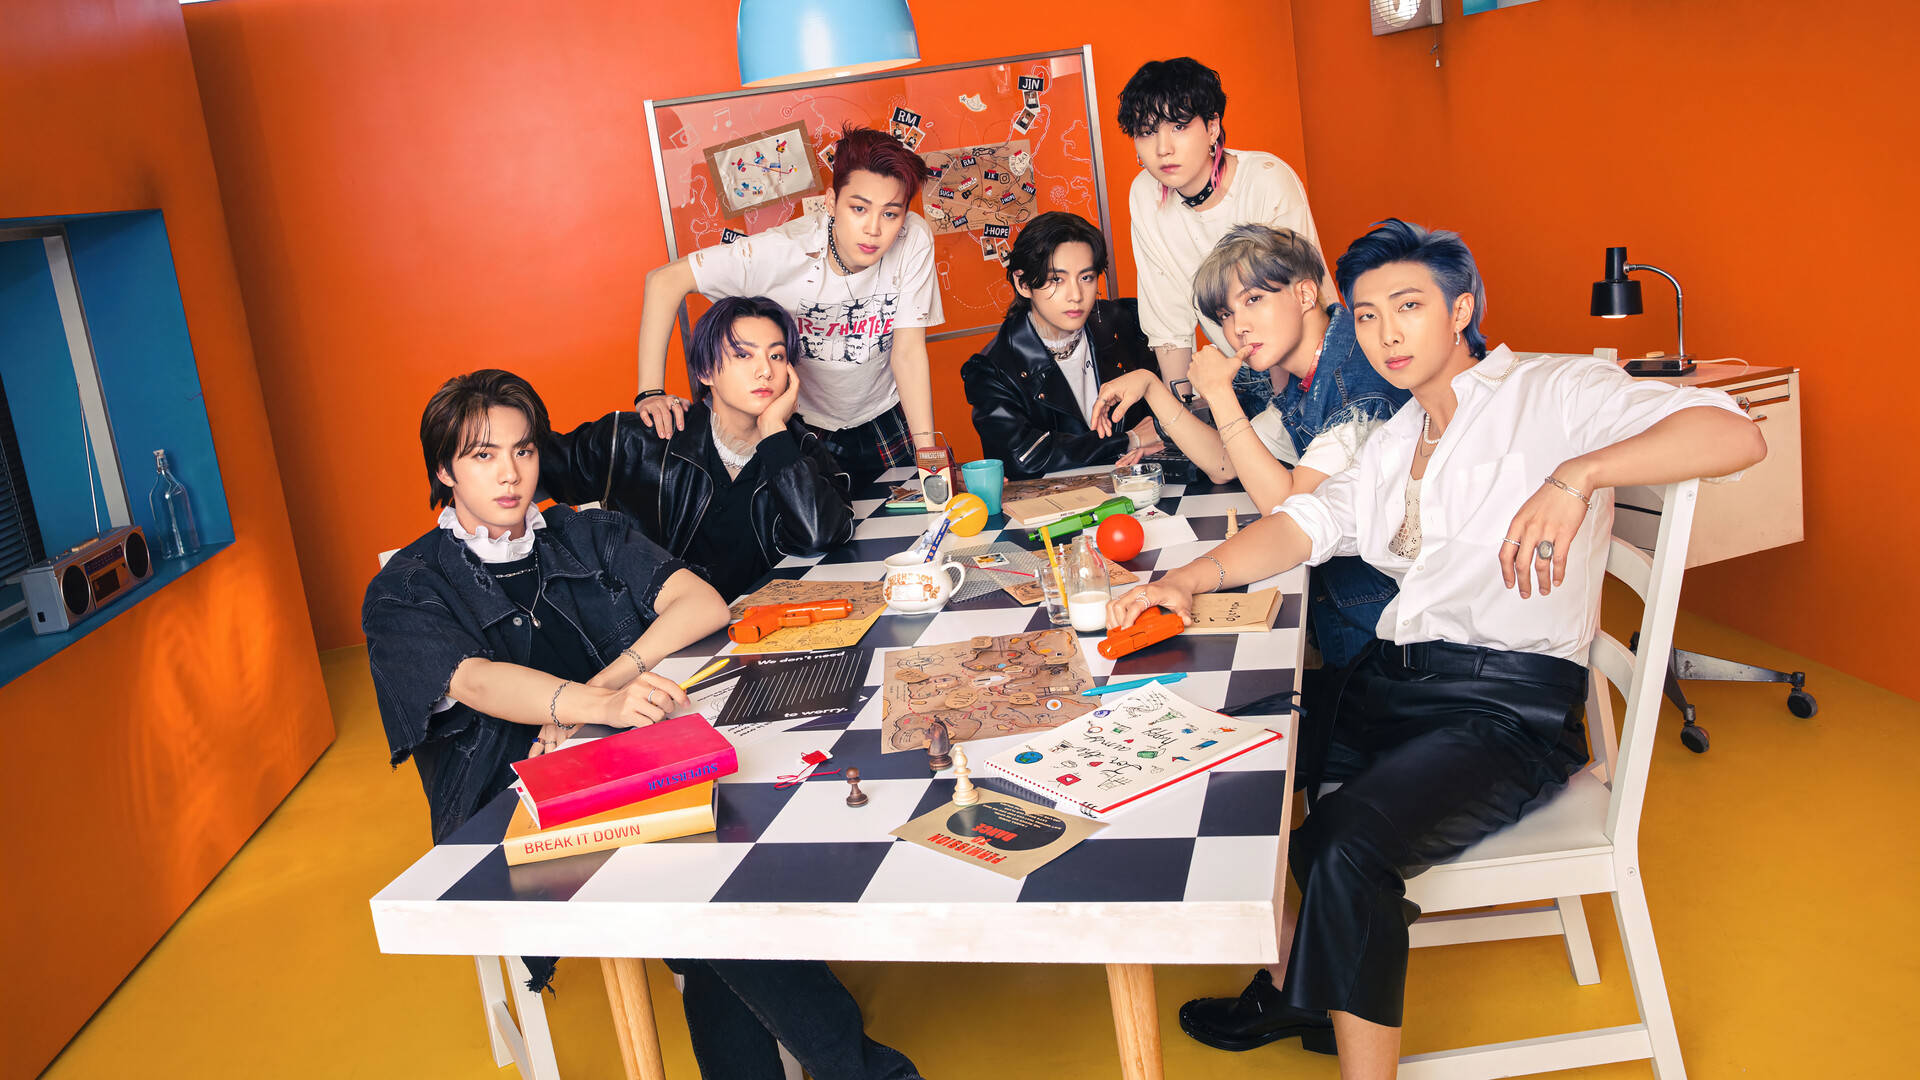 BTS Group Photo In Orange Room Wallpaper